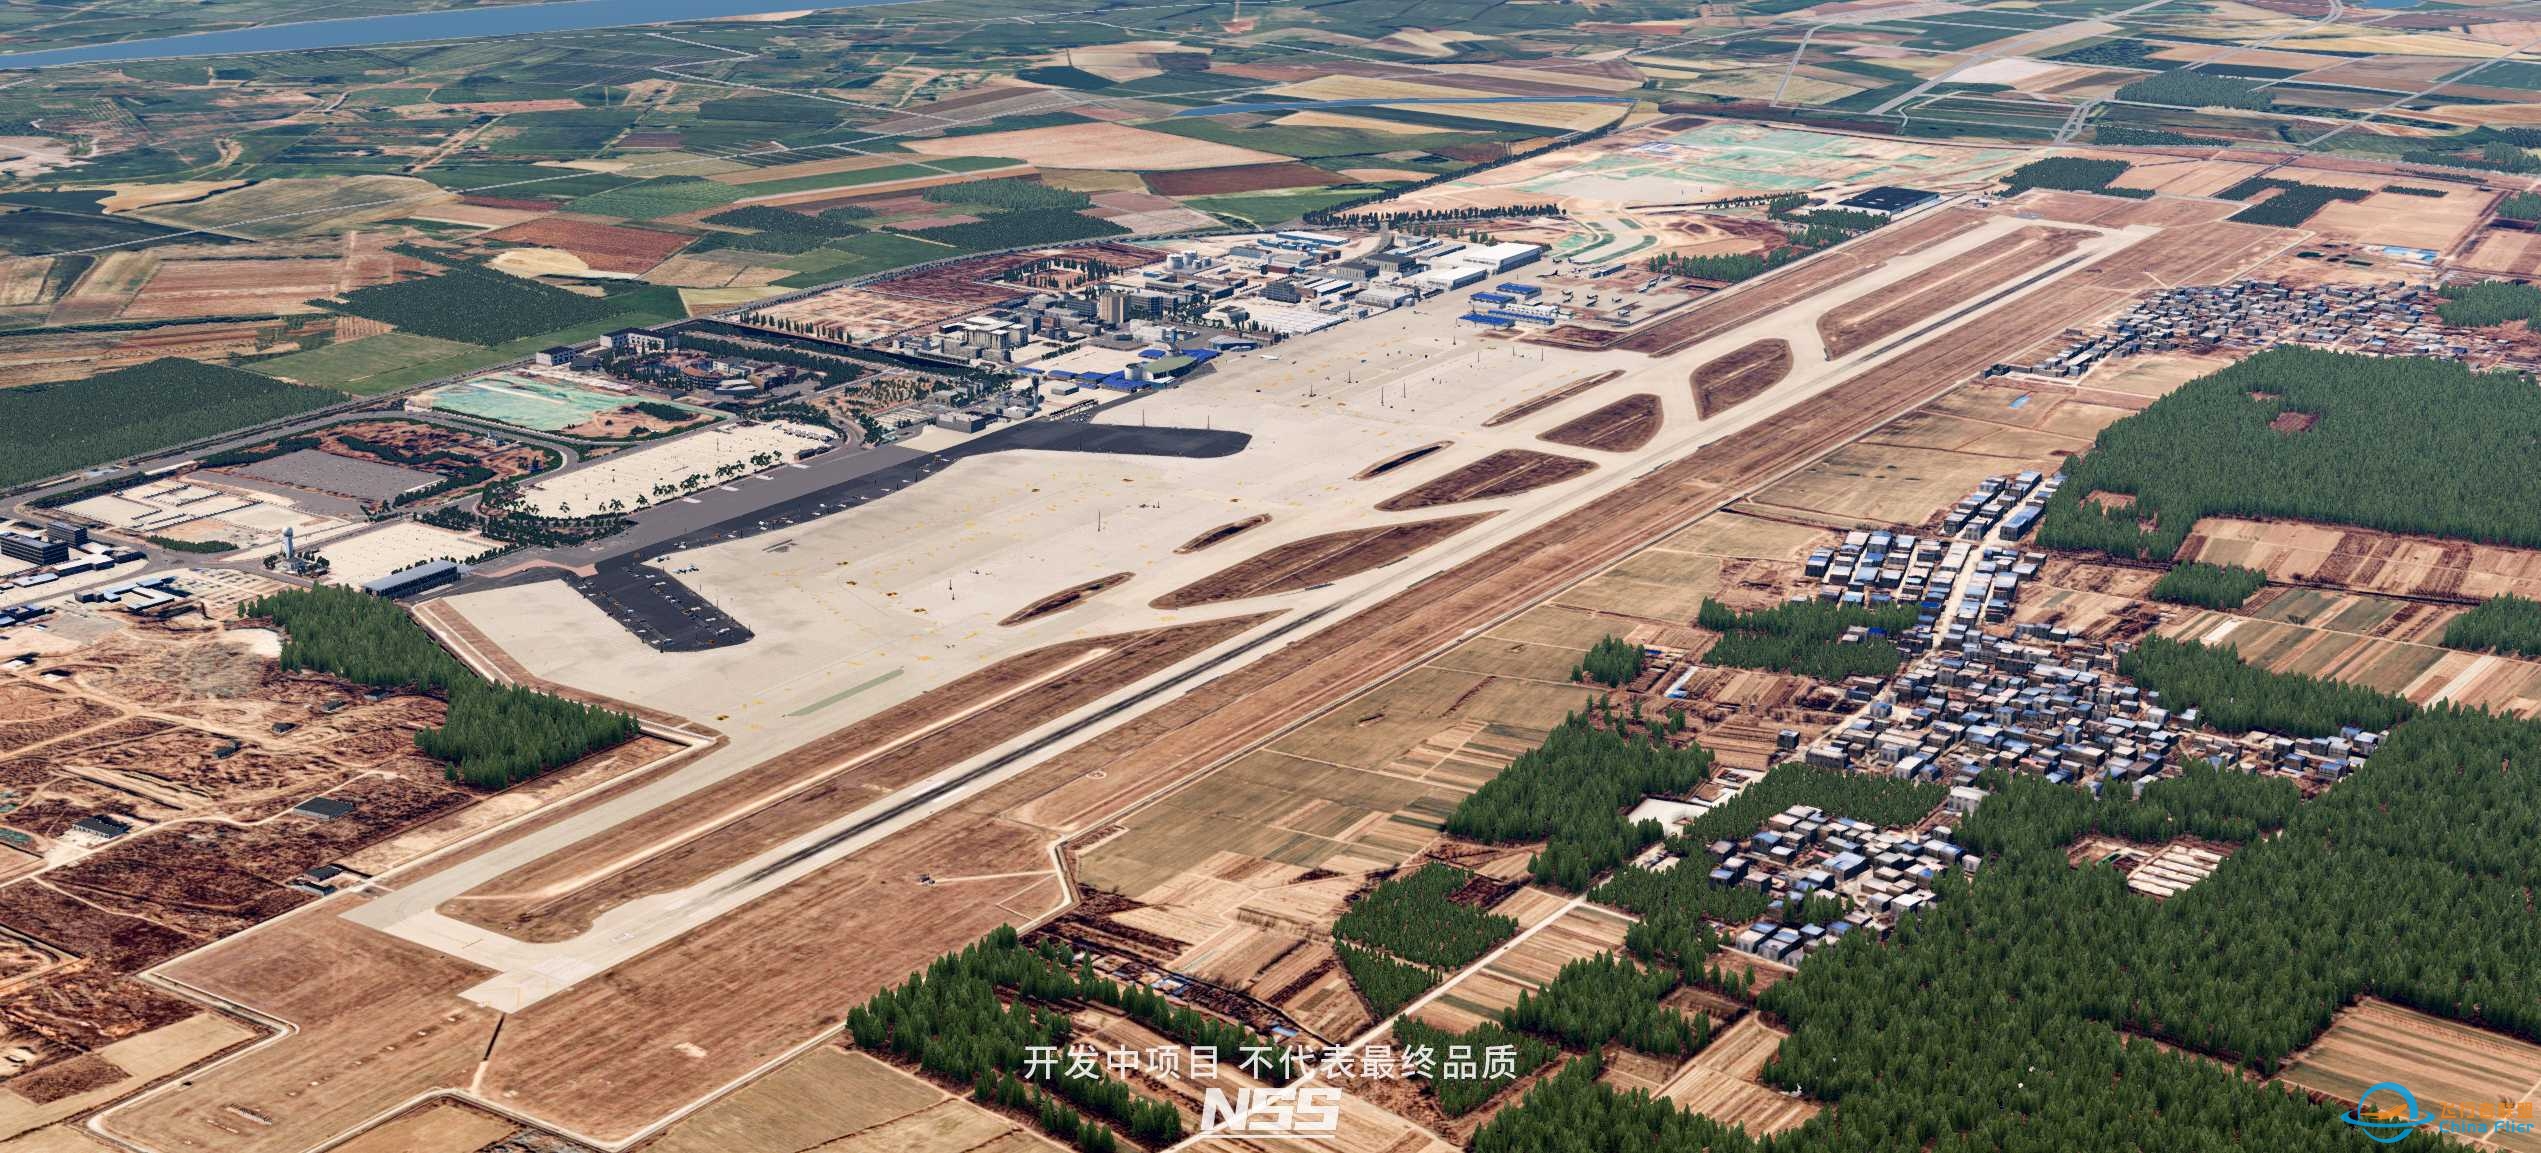 NSS地景开发组 ZSJN 济南遥墙国际机场项目预览 兼公布-946 